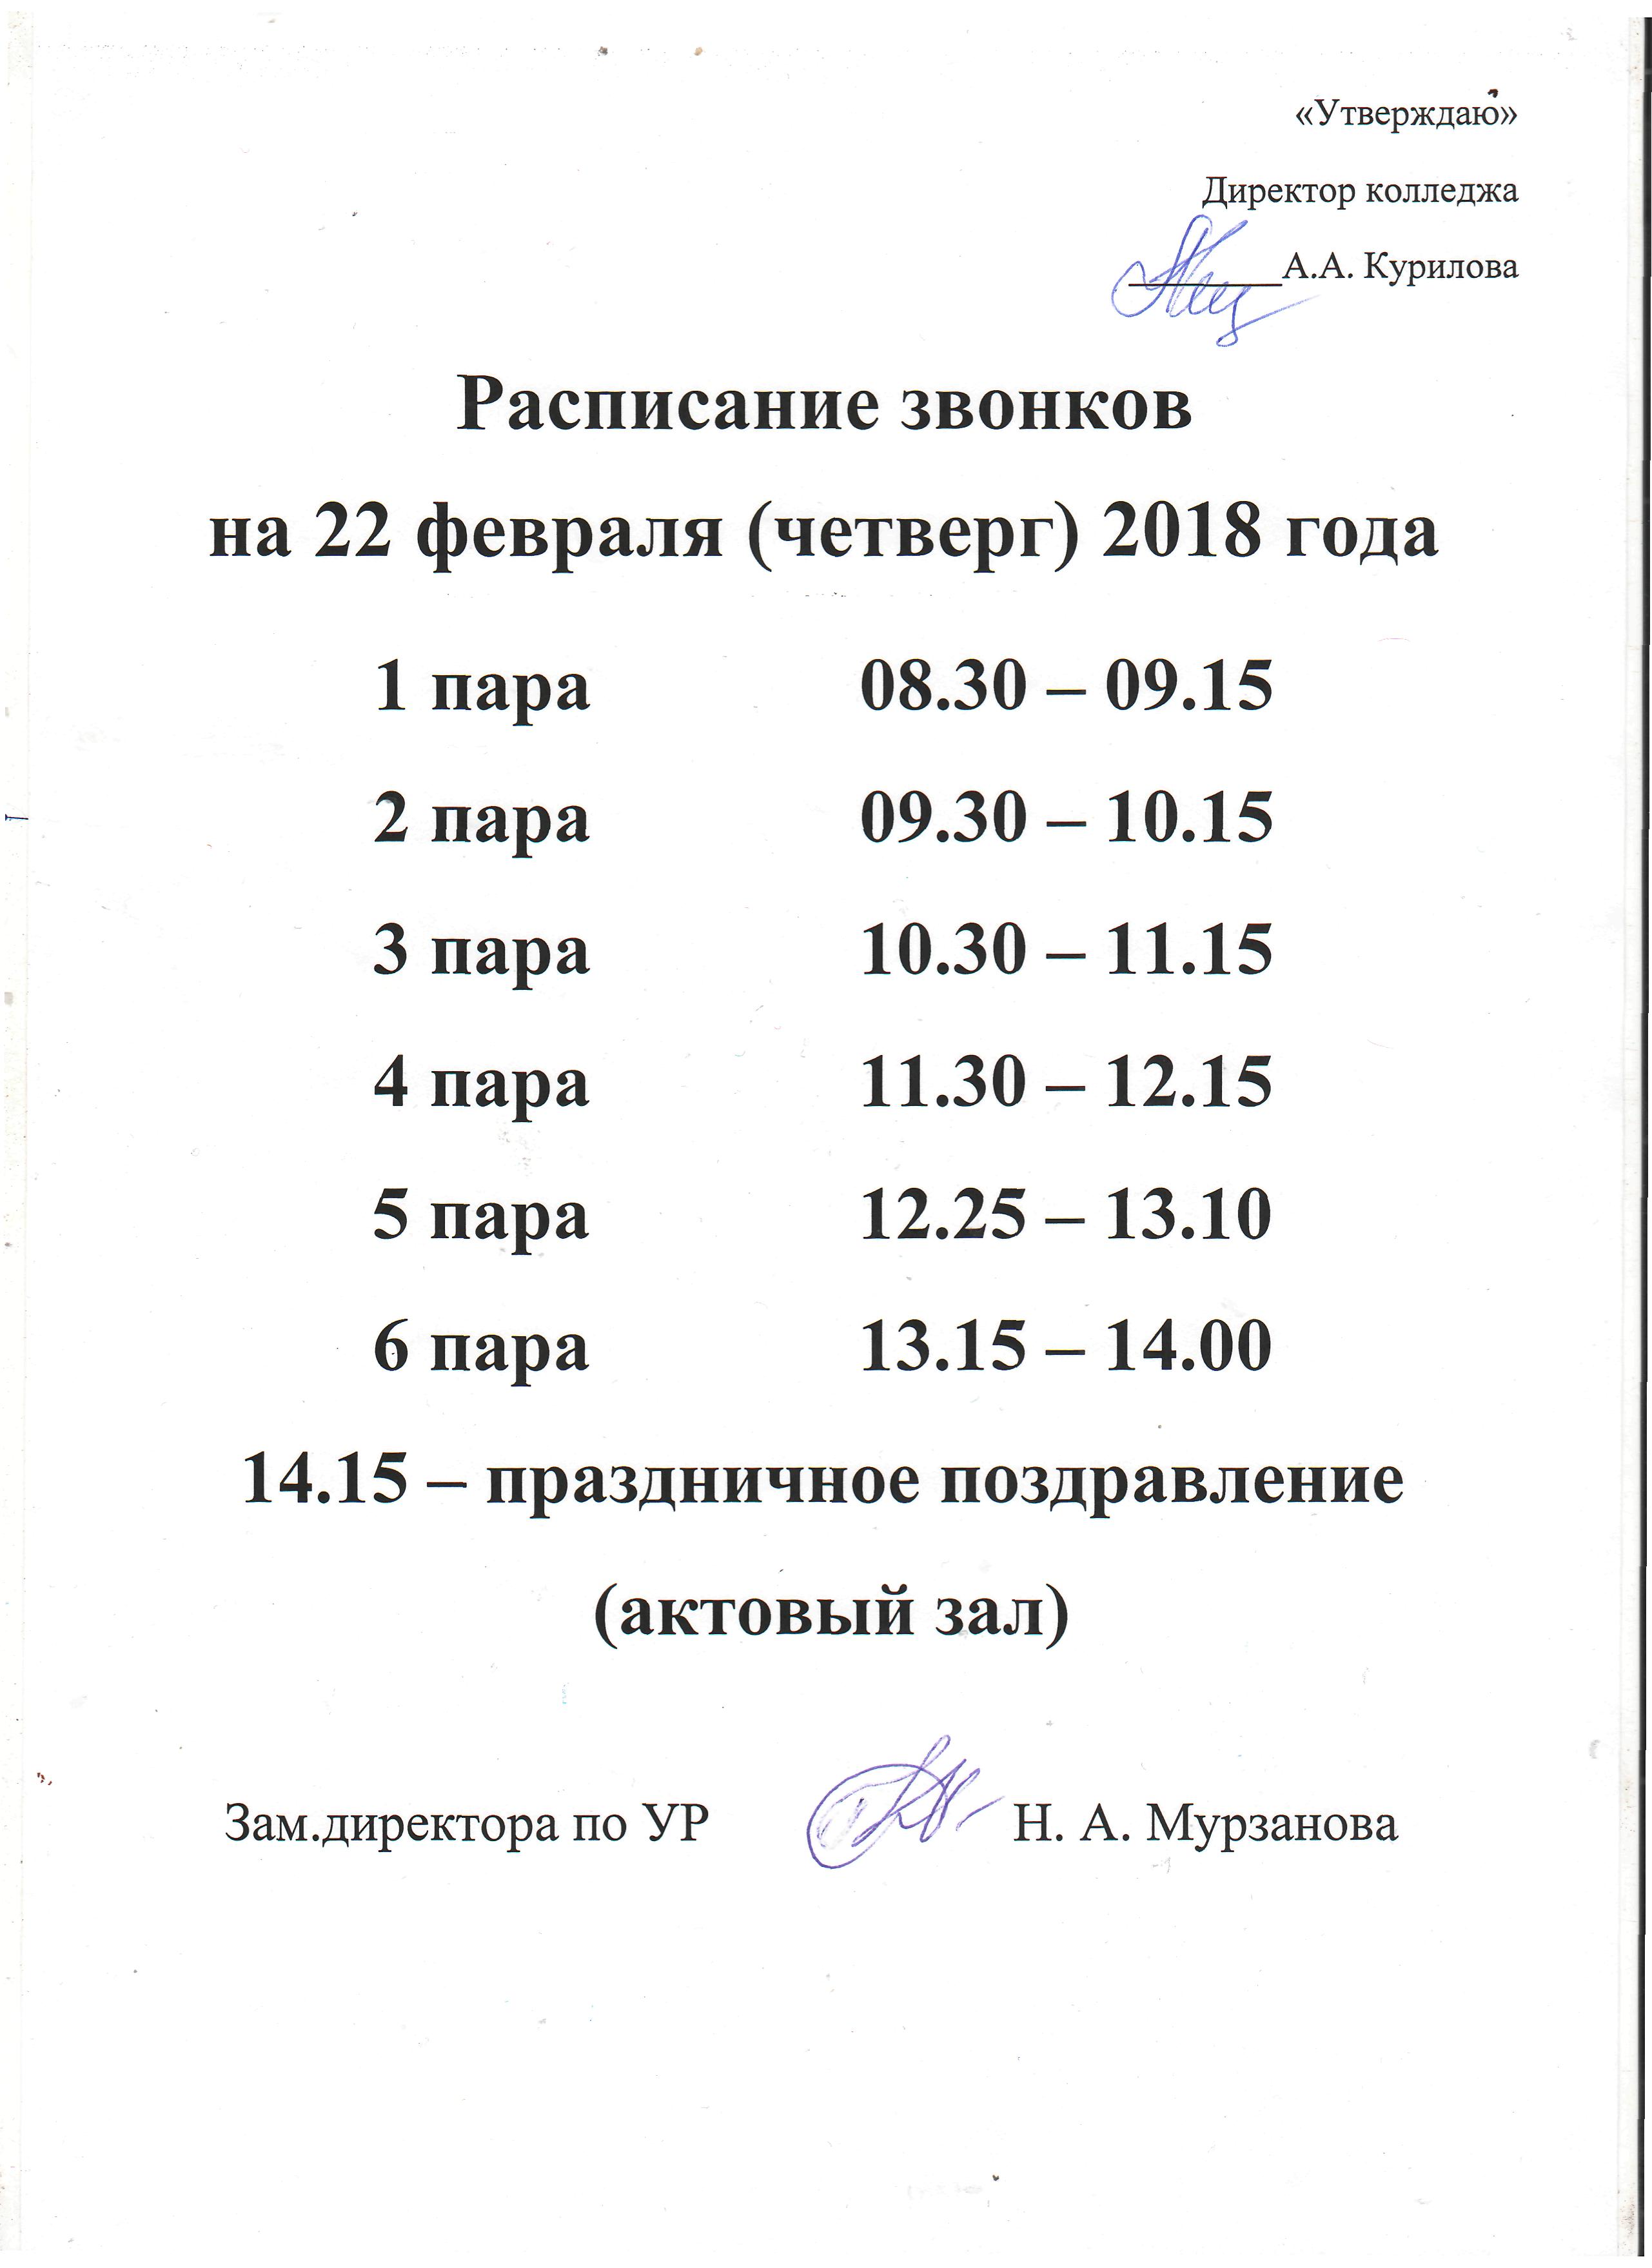 Расписание звонков москва